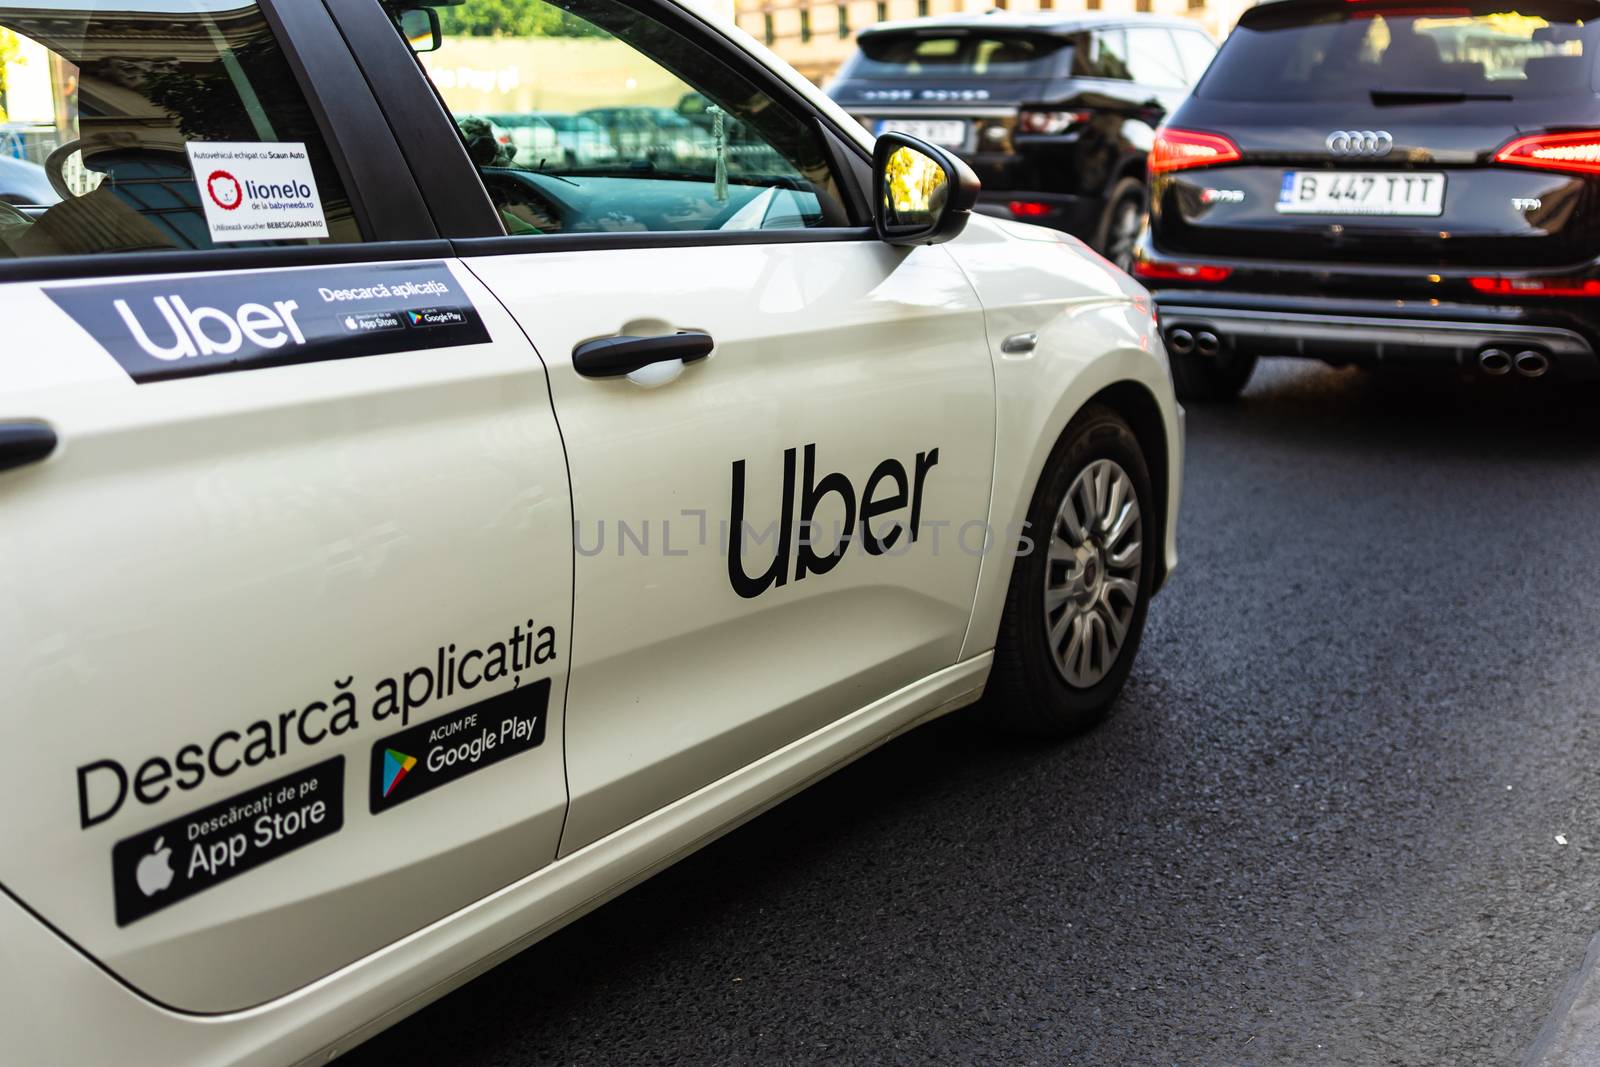 Uber car in traffic, modern city taxi service. Car pollution, tr by vladispas